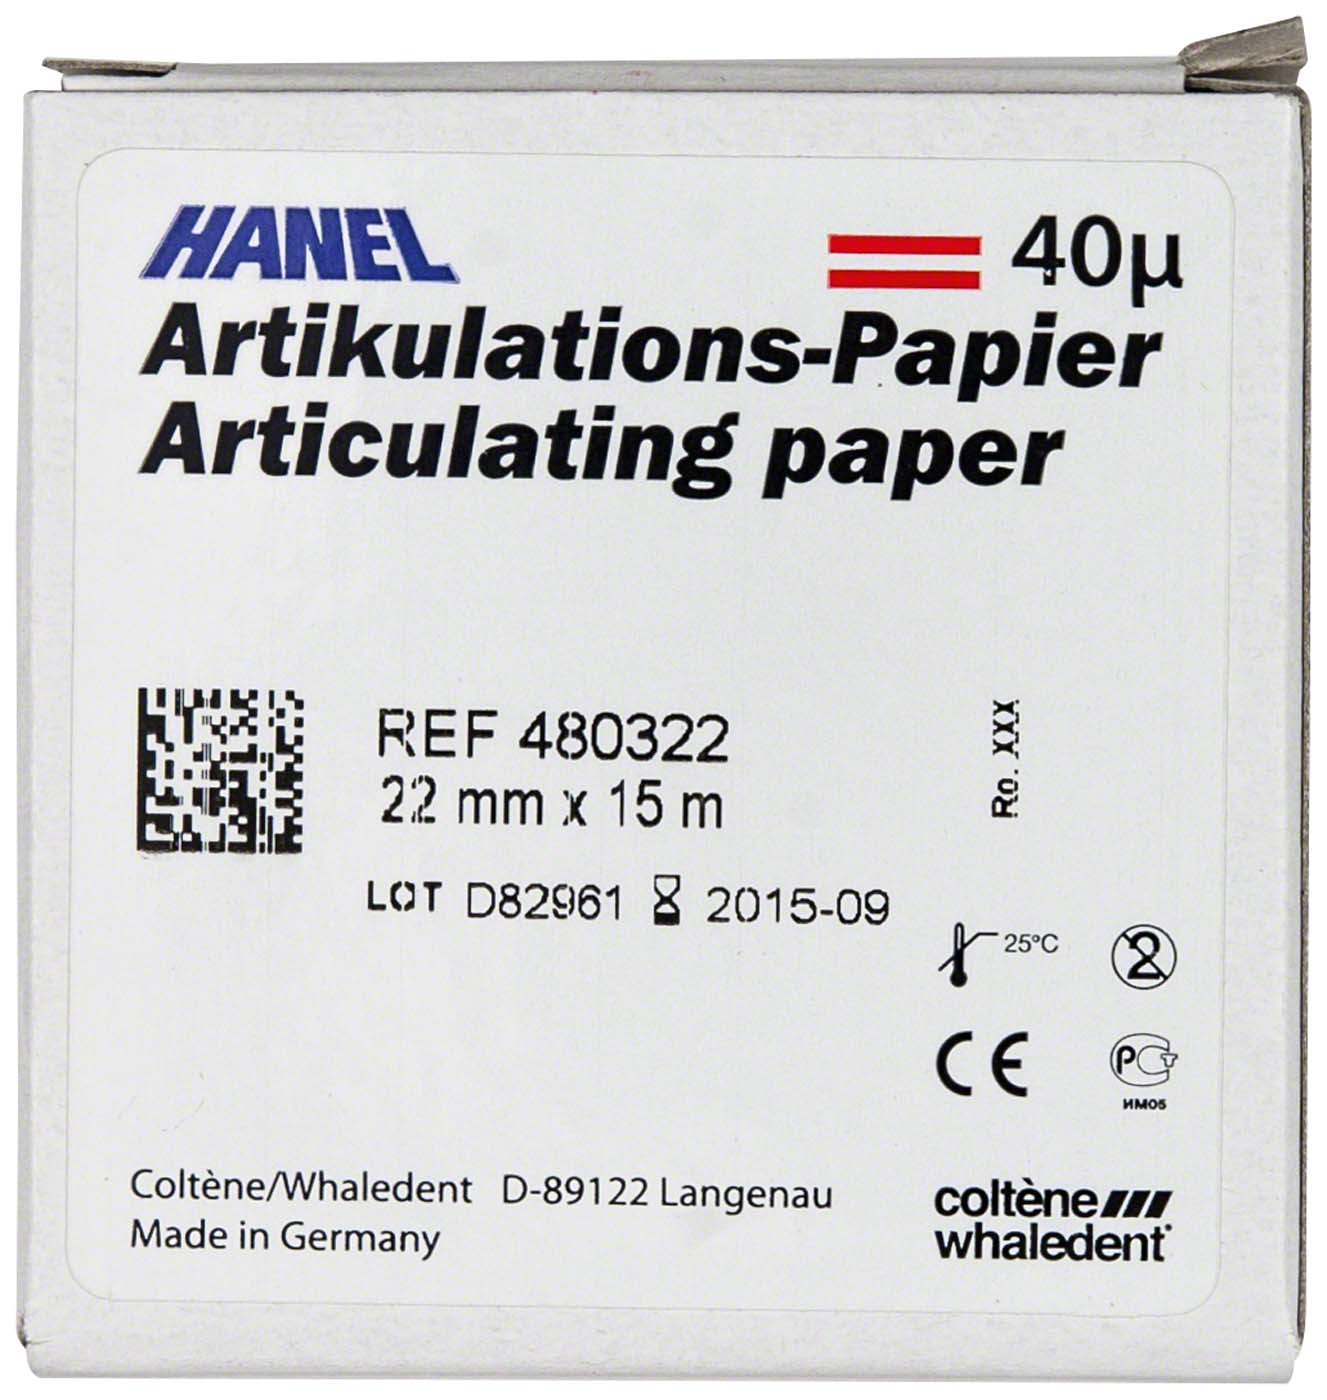 HANEL Artikulations-Papier 40 µm COLTENE